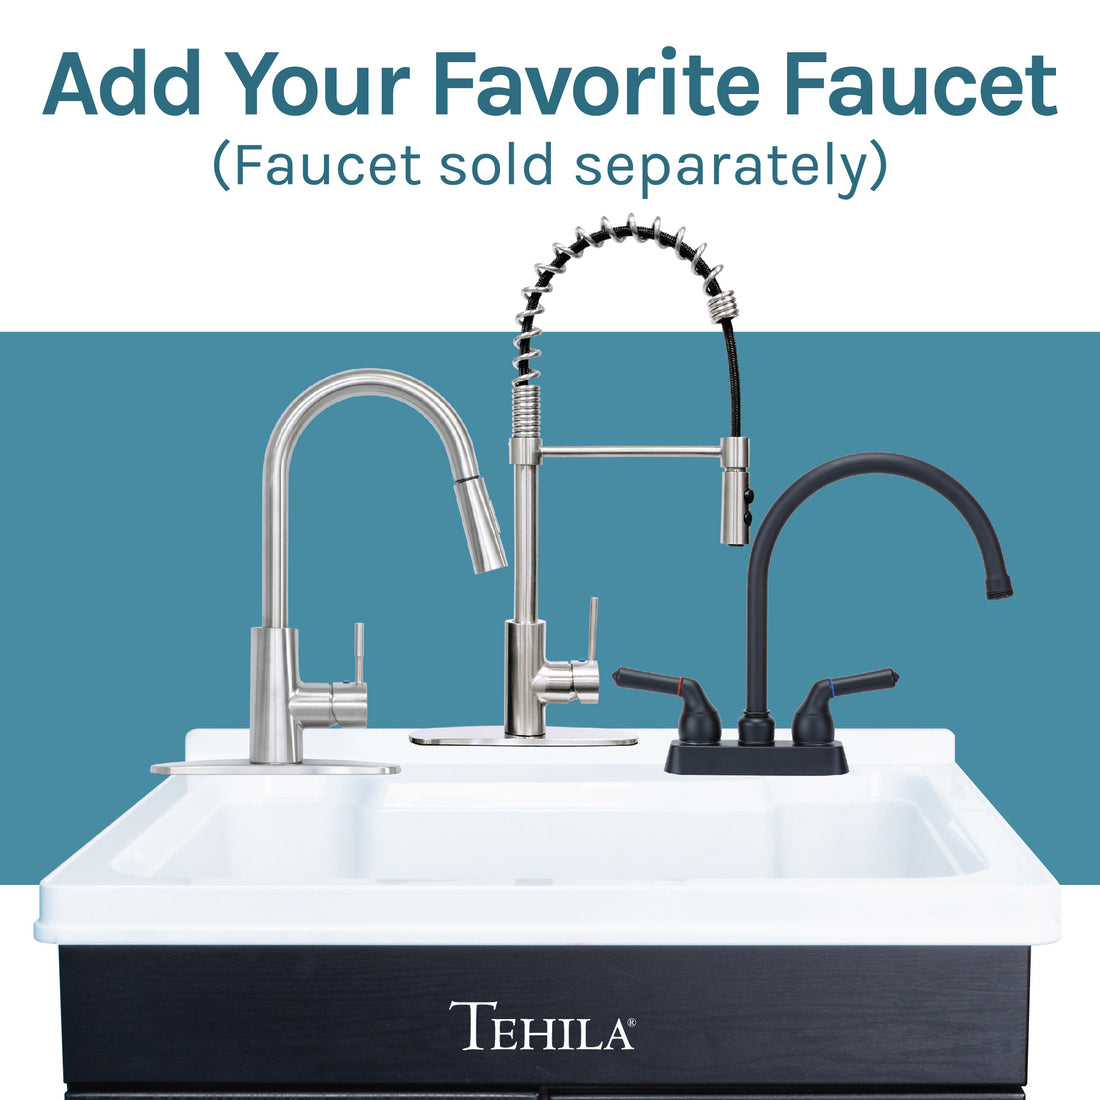 Add your Favorite Faucet(Faucet sold separately) Tehila